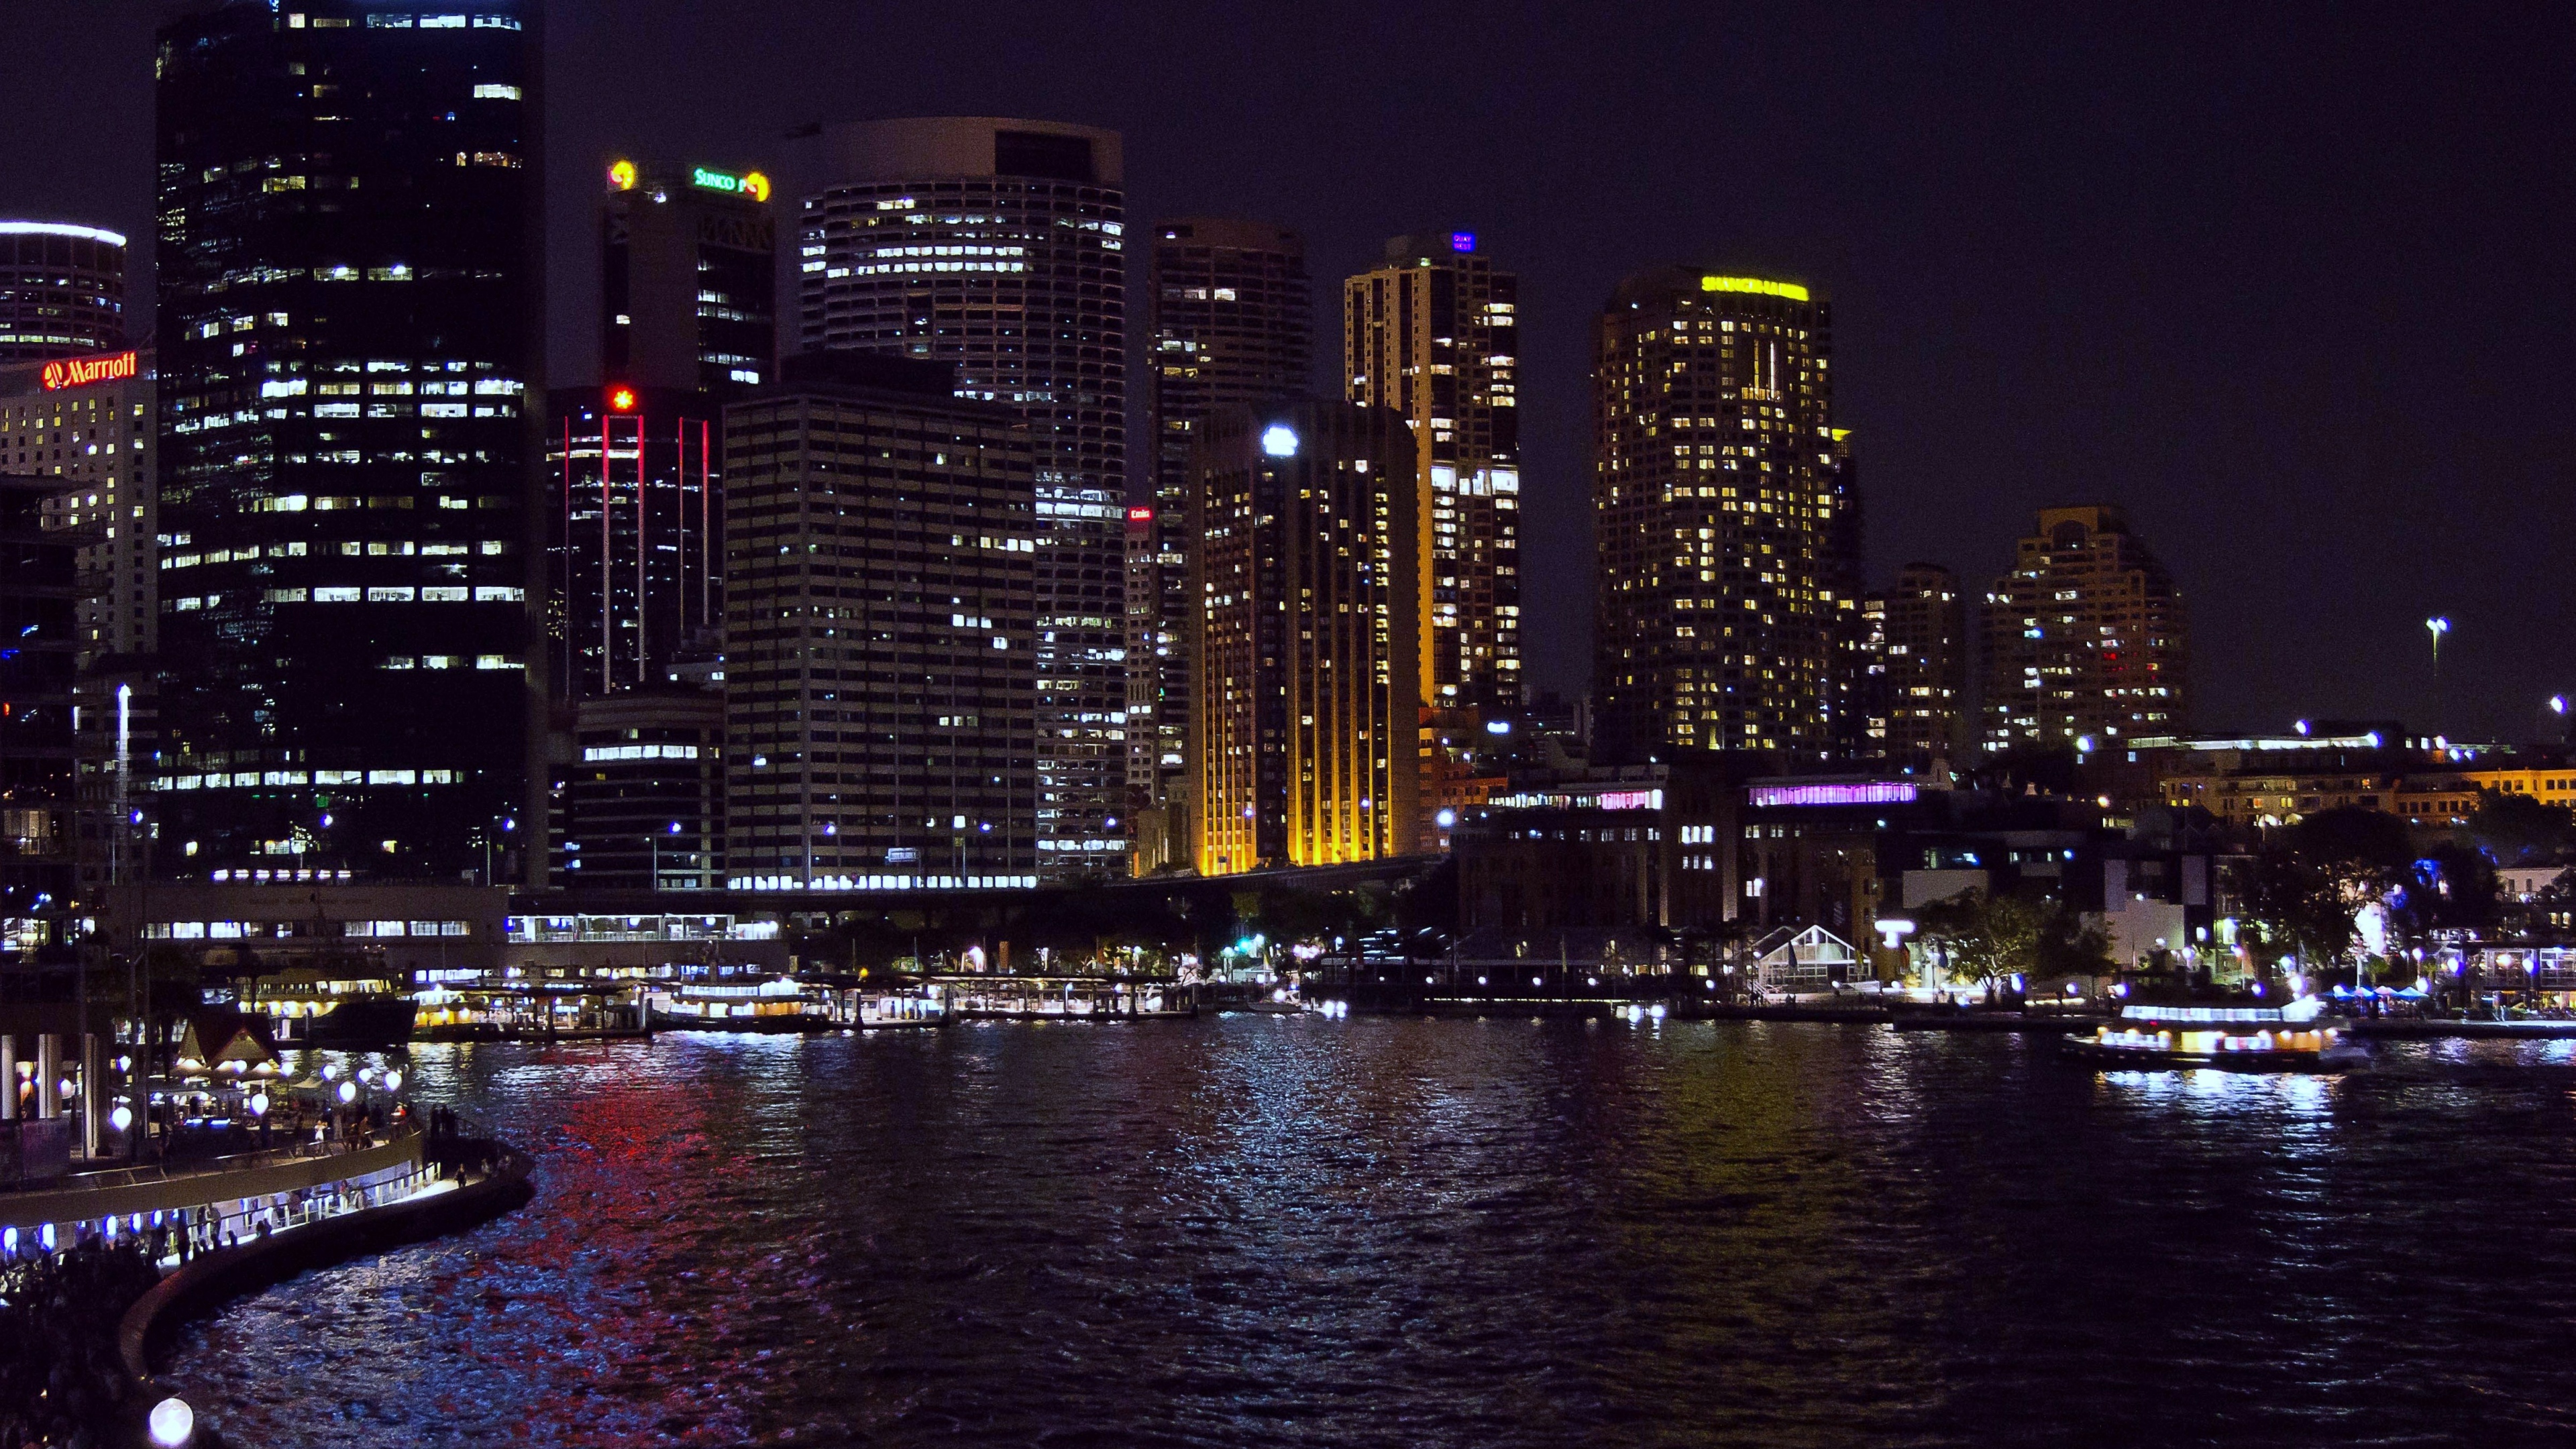 Cities at Night Wallpapers - HD Desktop Backgrounds